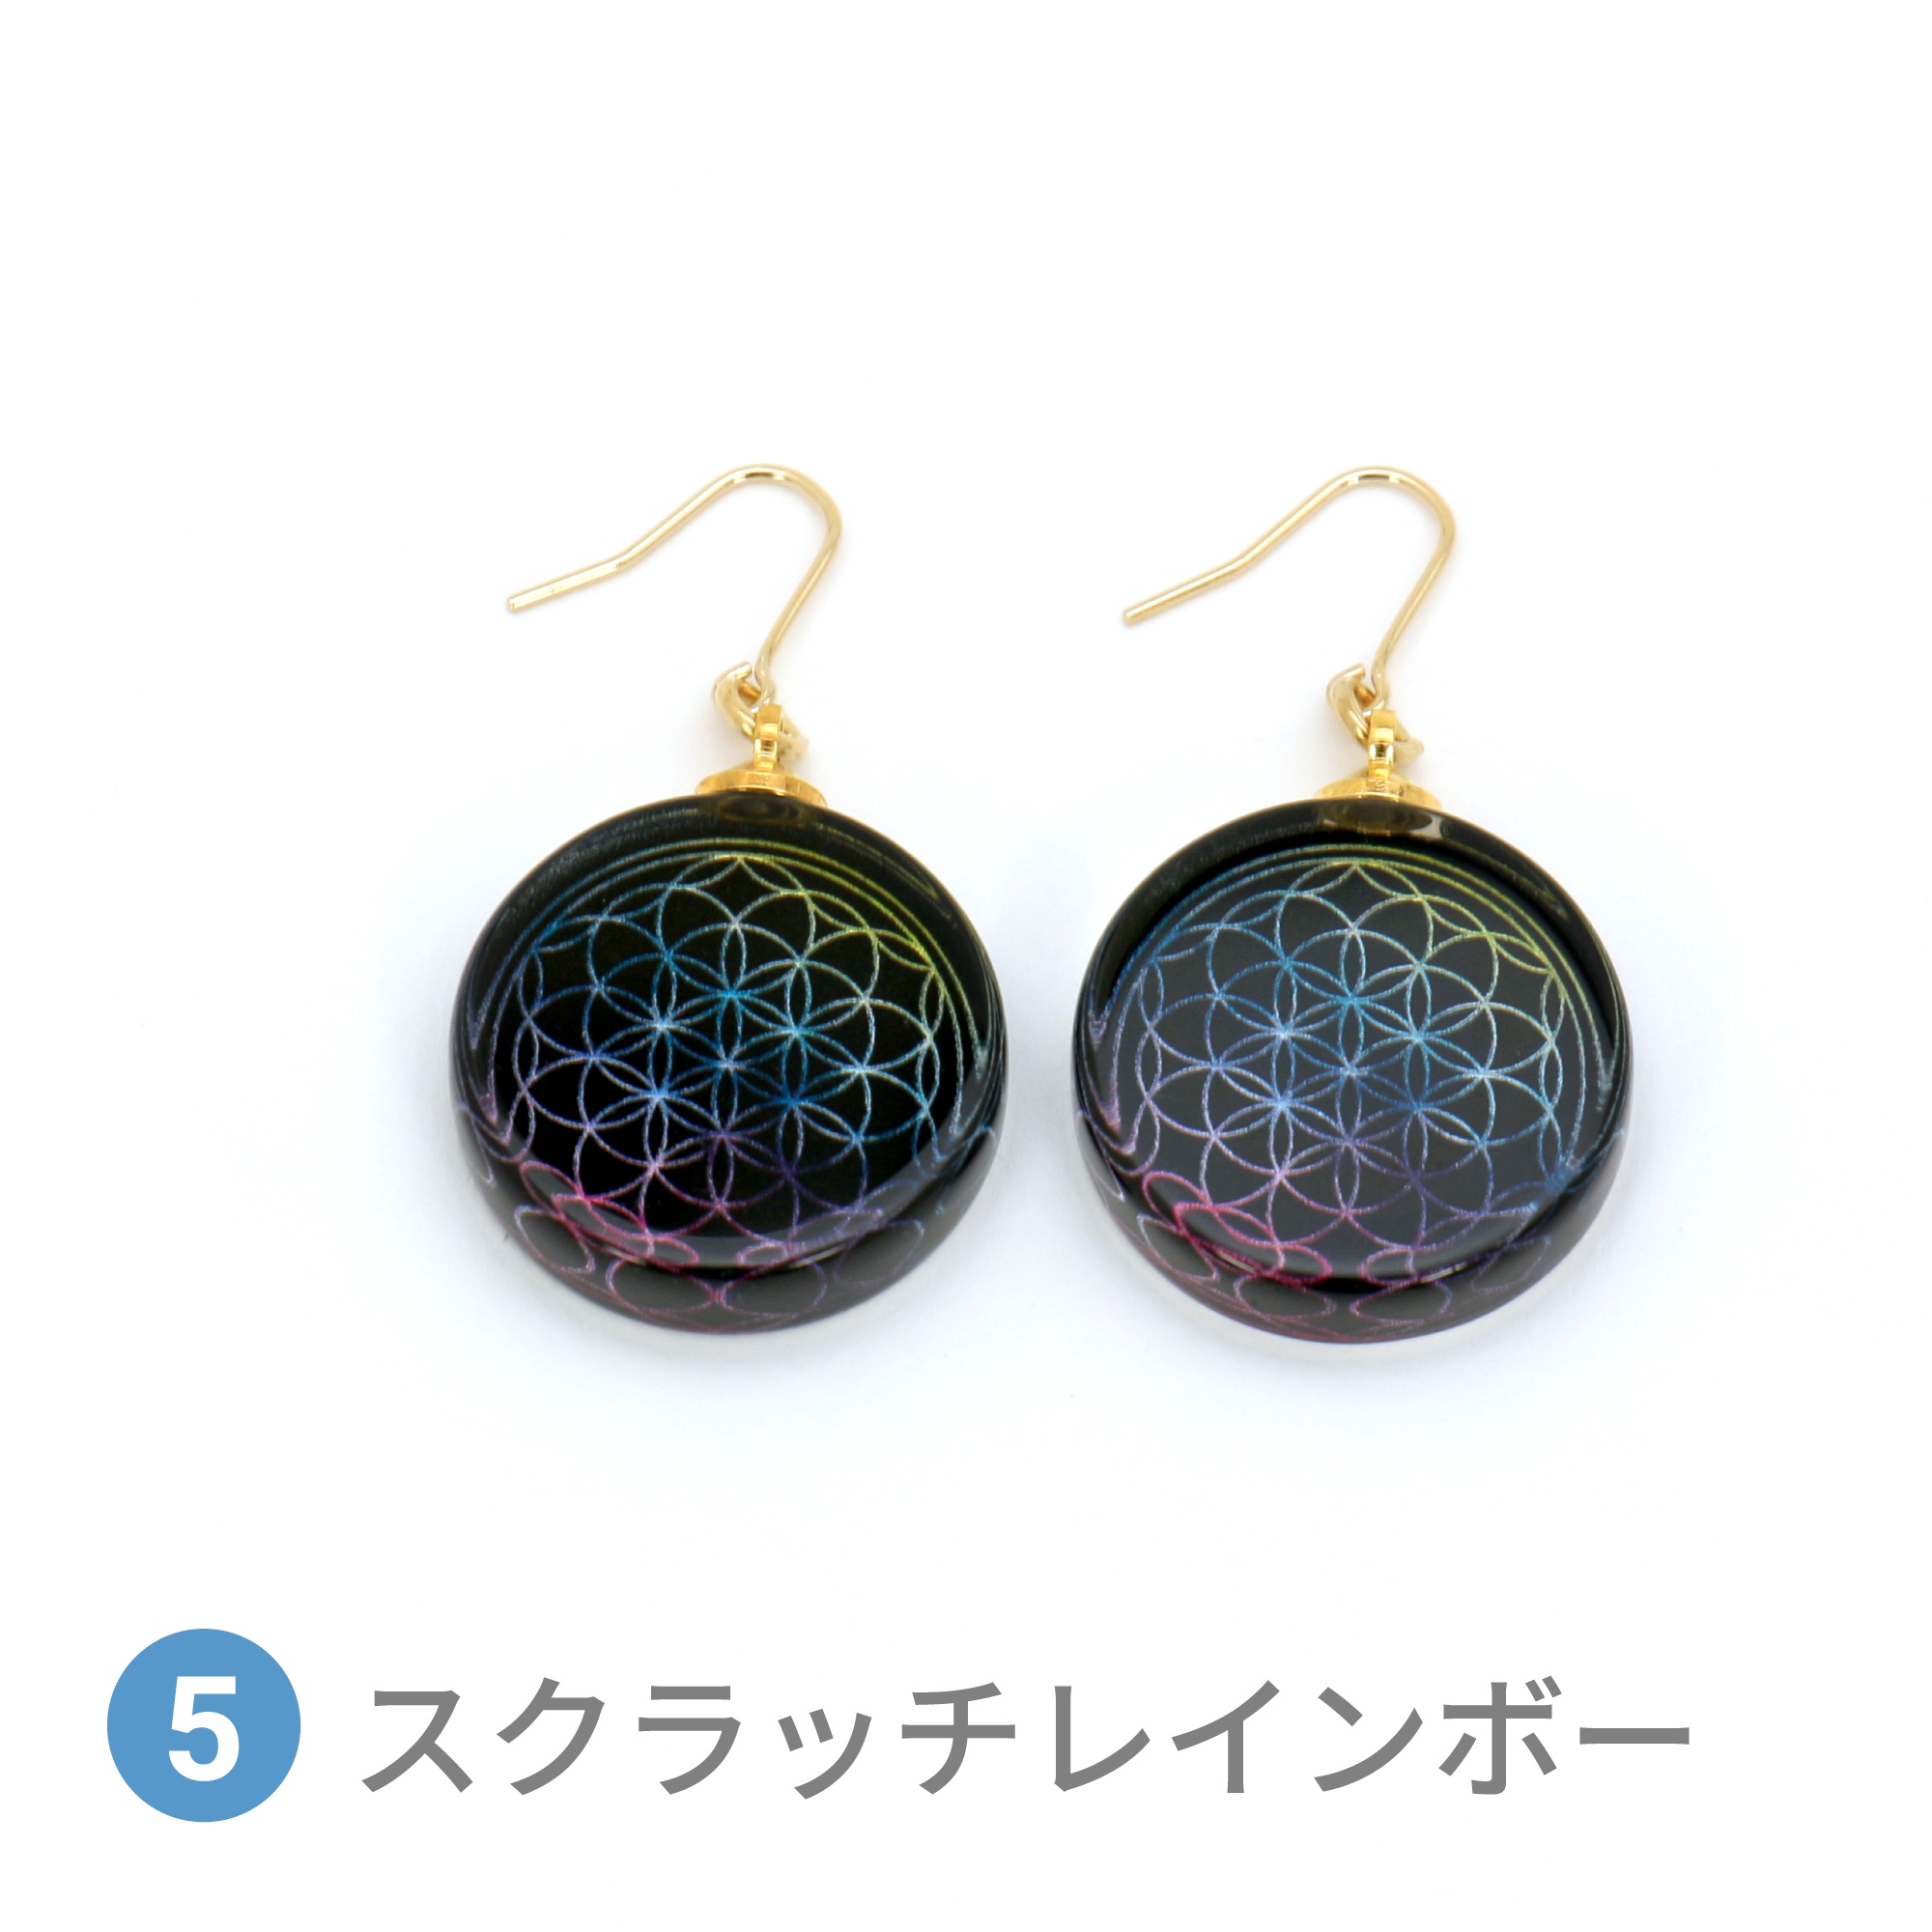 Glass accessories Pierced Earring FLOWER OF LIFE scratch rainbow round shape